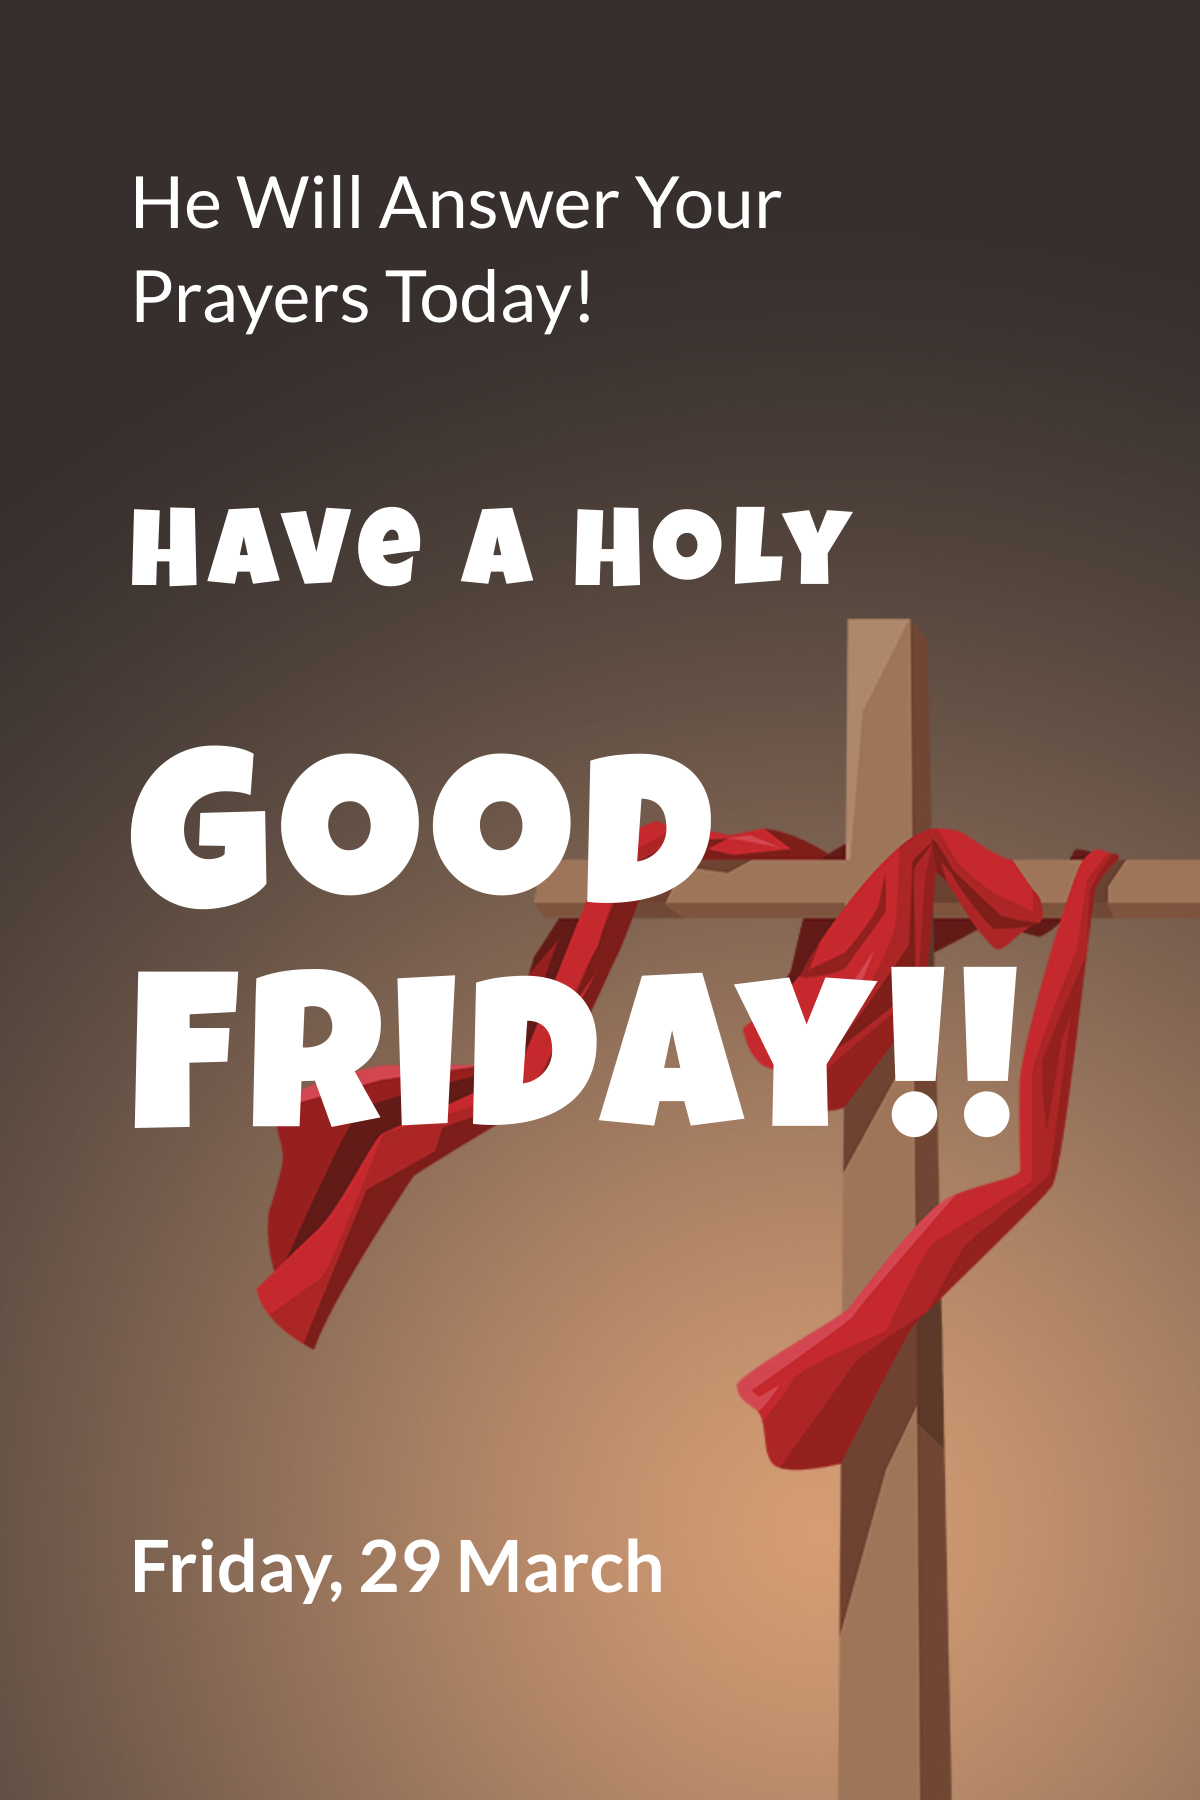 Free Good Friday Church Pinterest Post Template